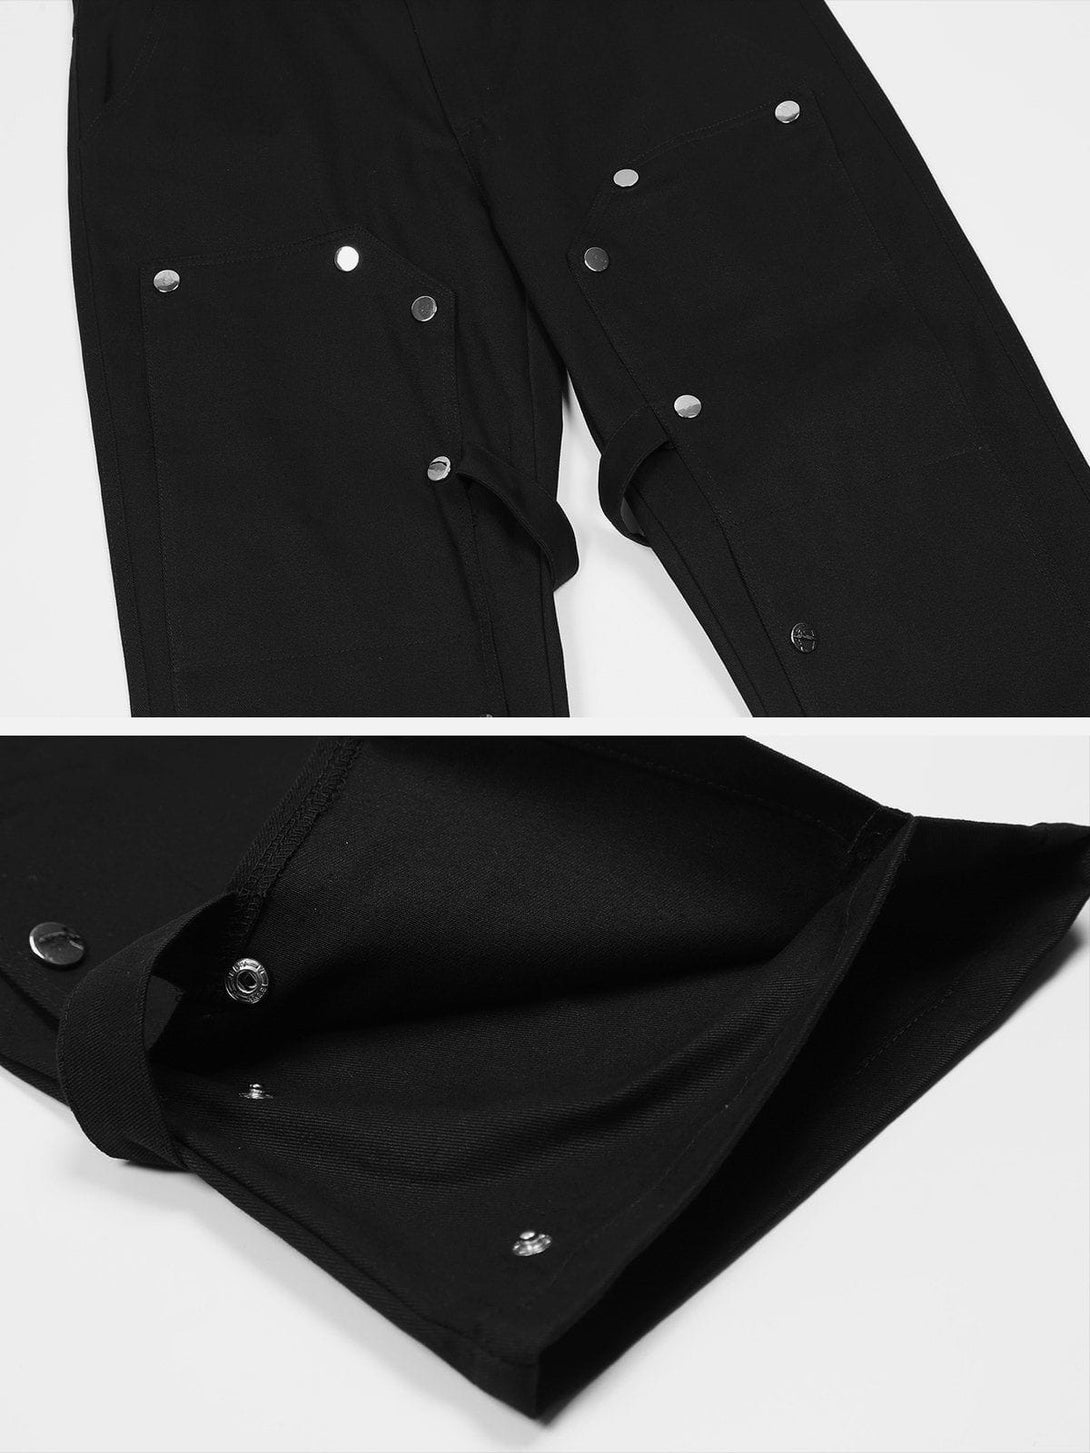 AlanBalen® - Star Embroidery Cargo Pants AlanBalen